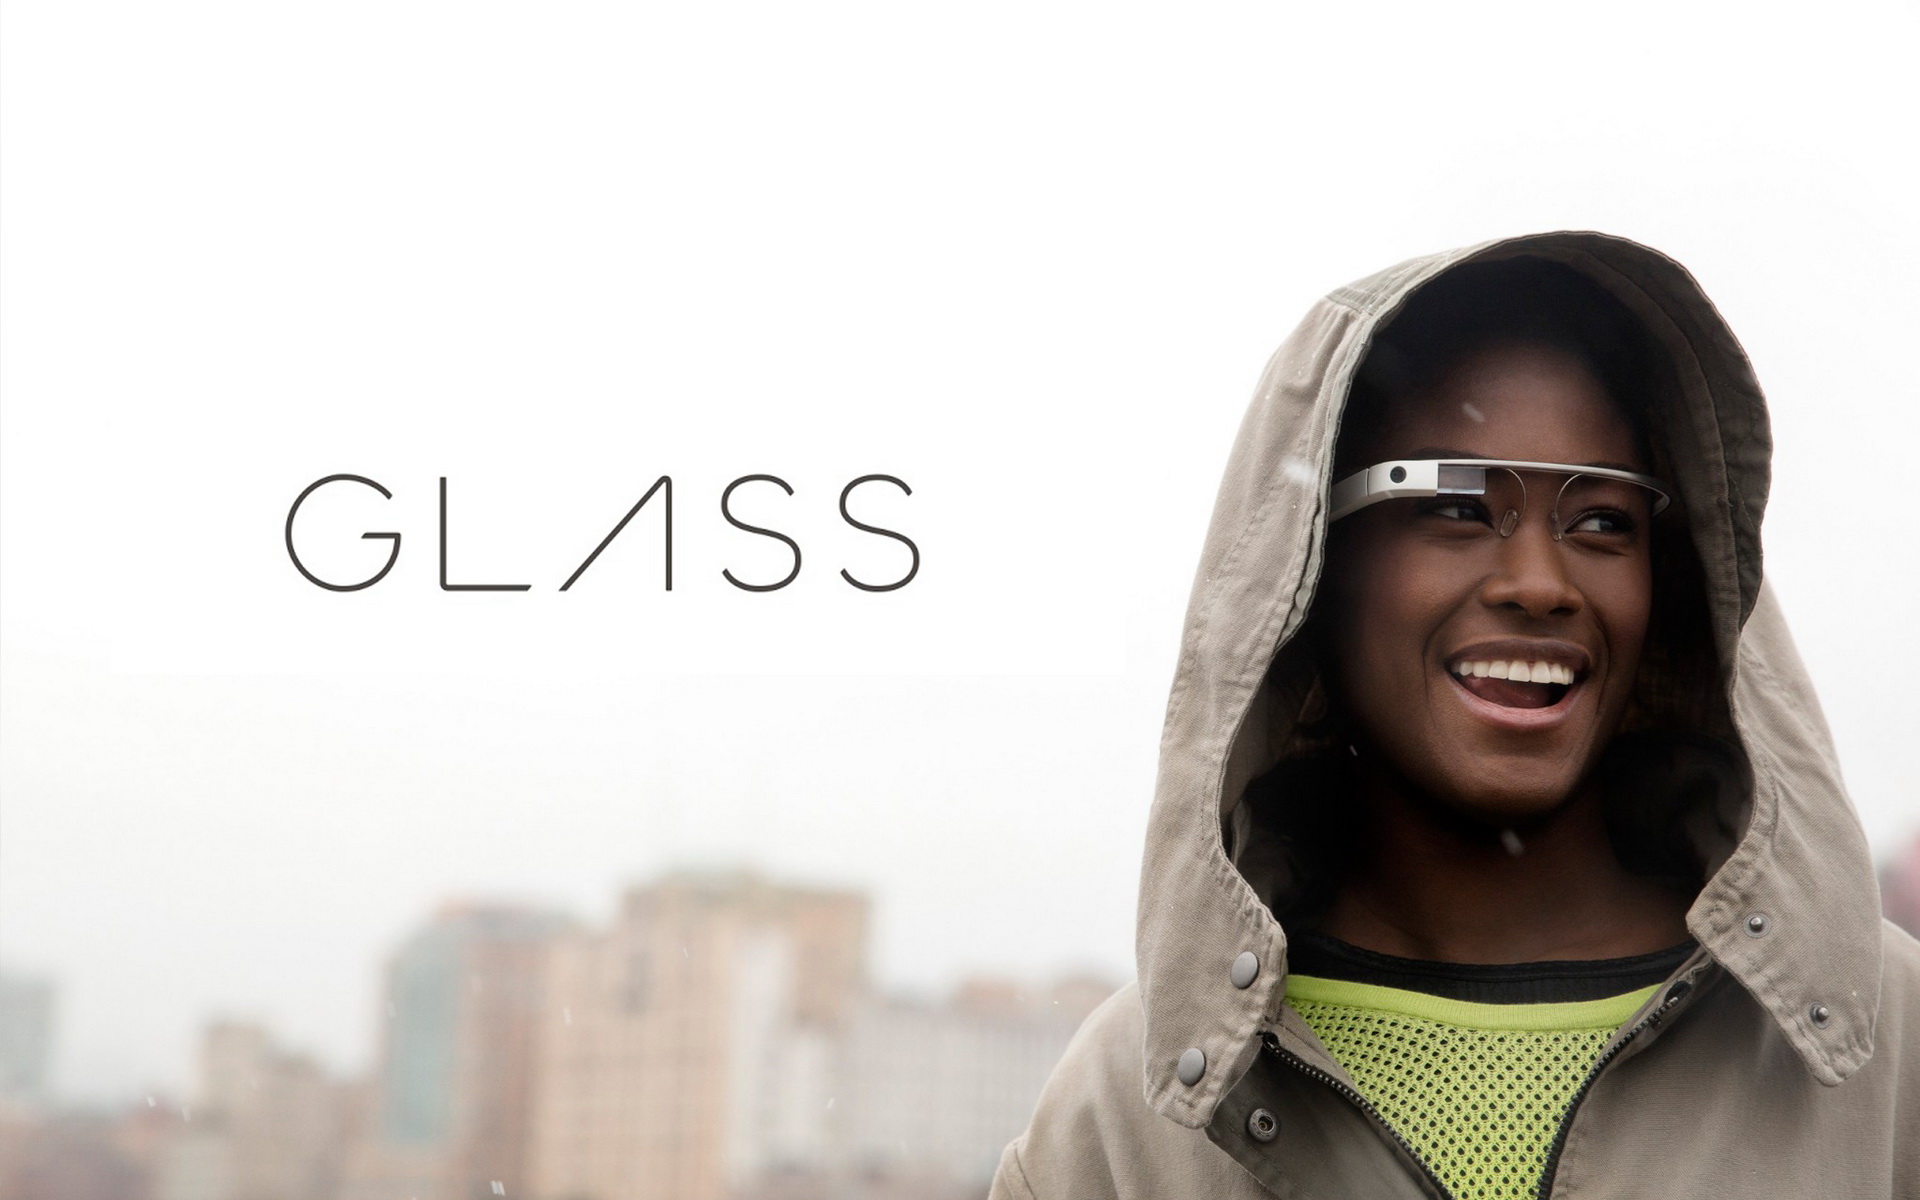 http://www.contenthero.co.uk/wp-content/uploads/2014/02/Google-Glass.jpg